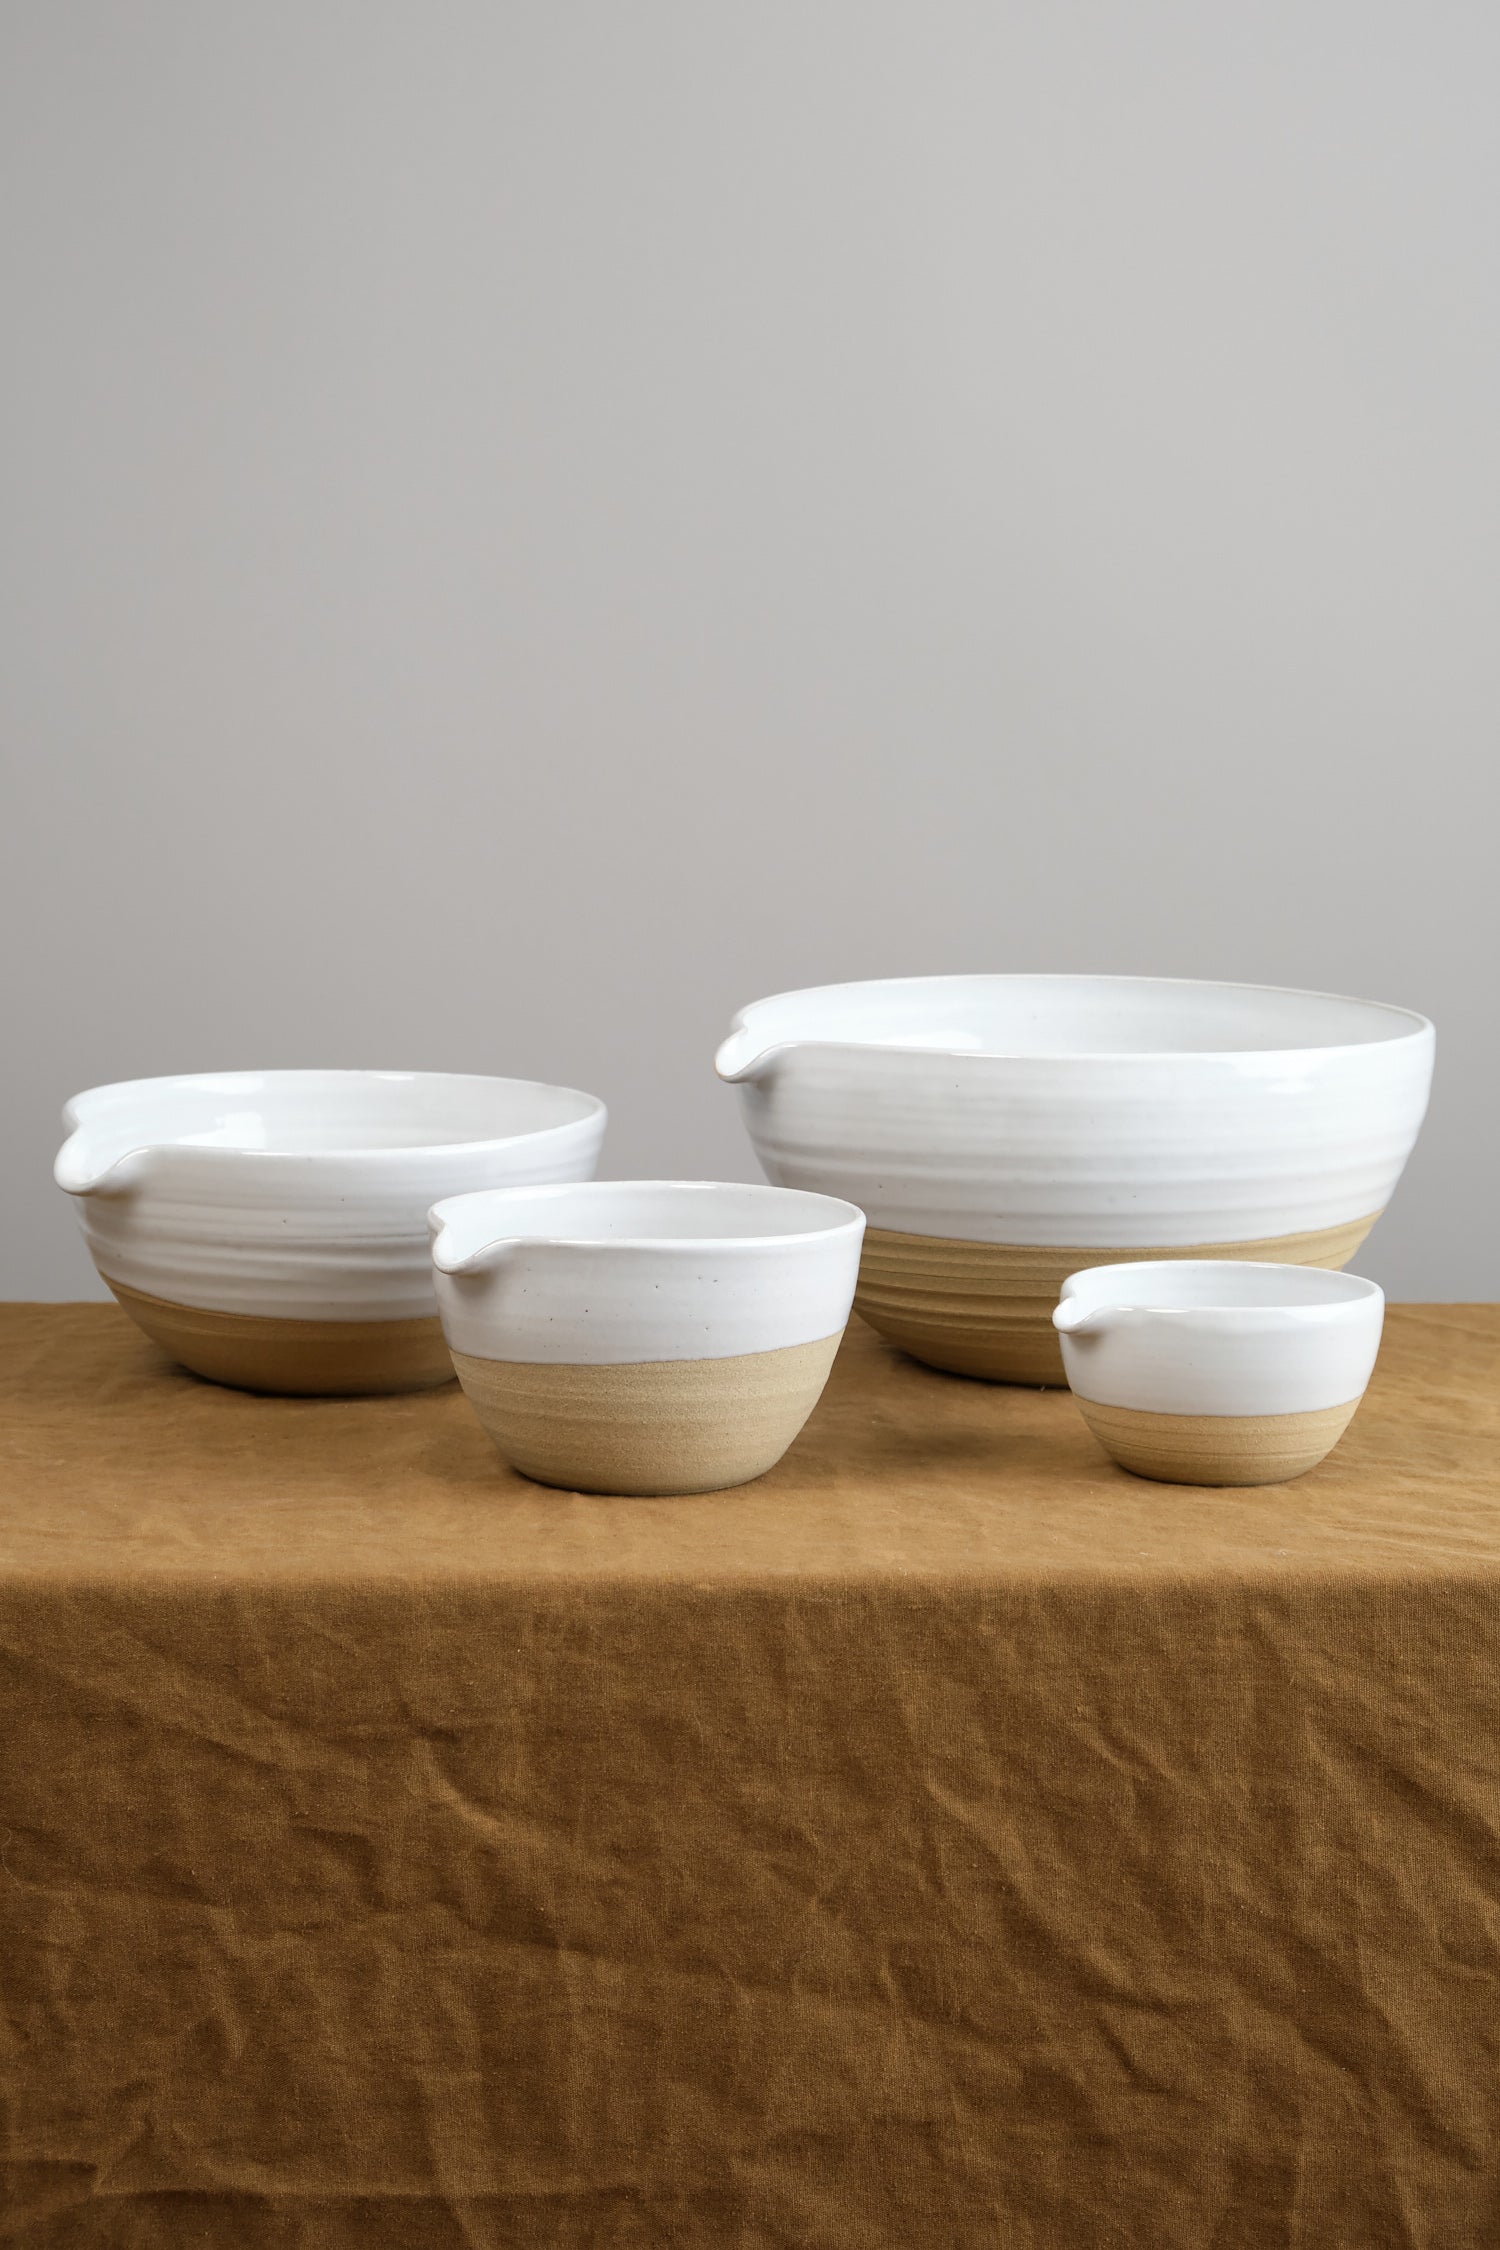 Pantry Bowl Set on table